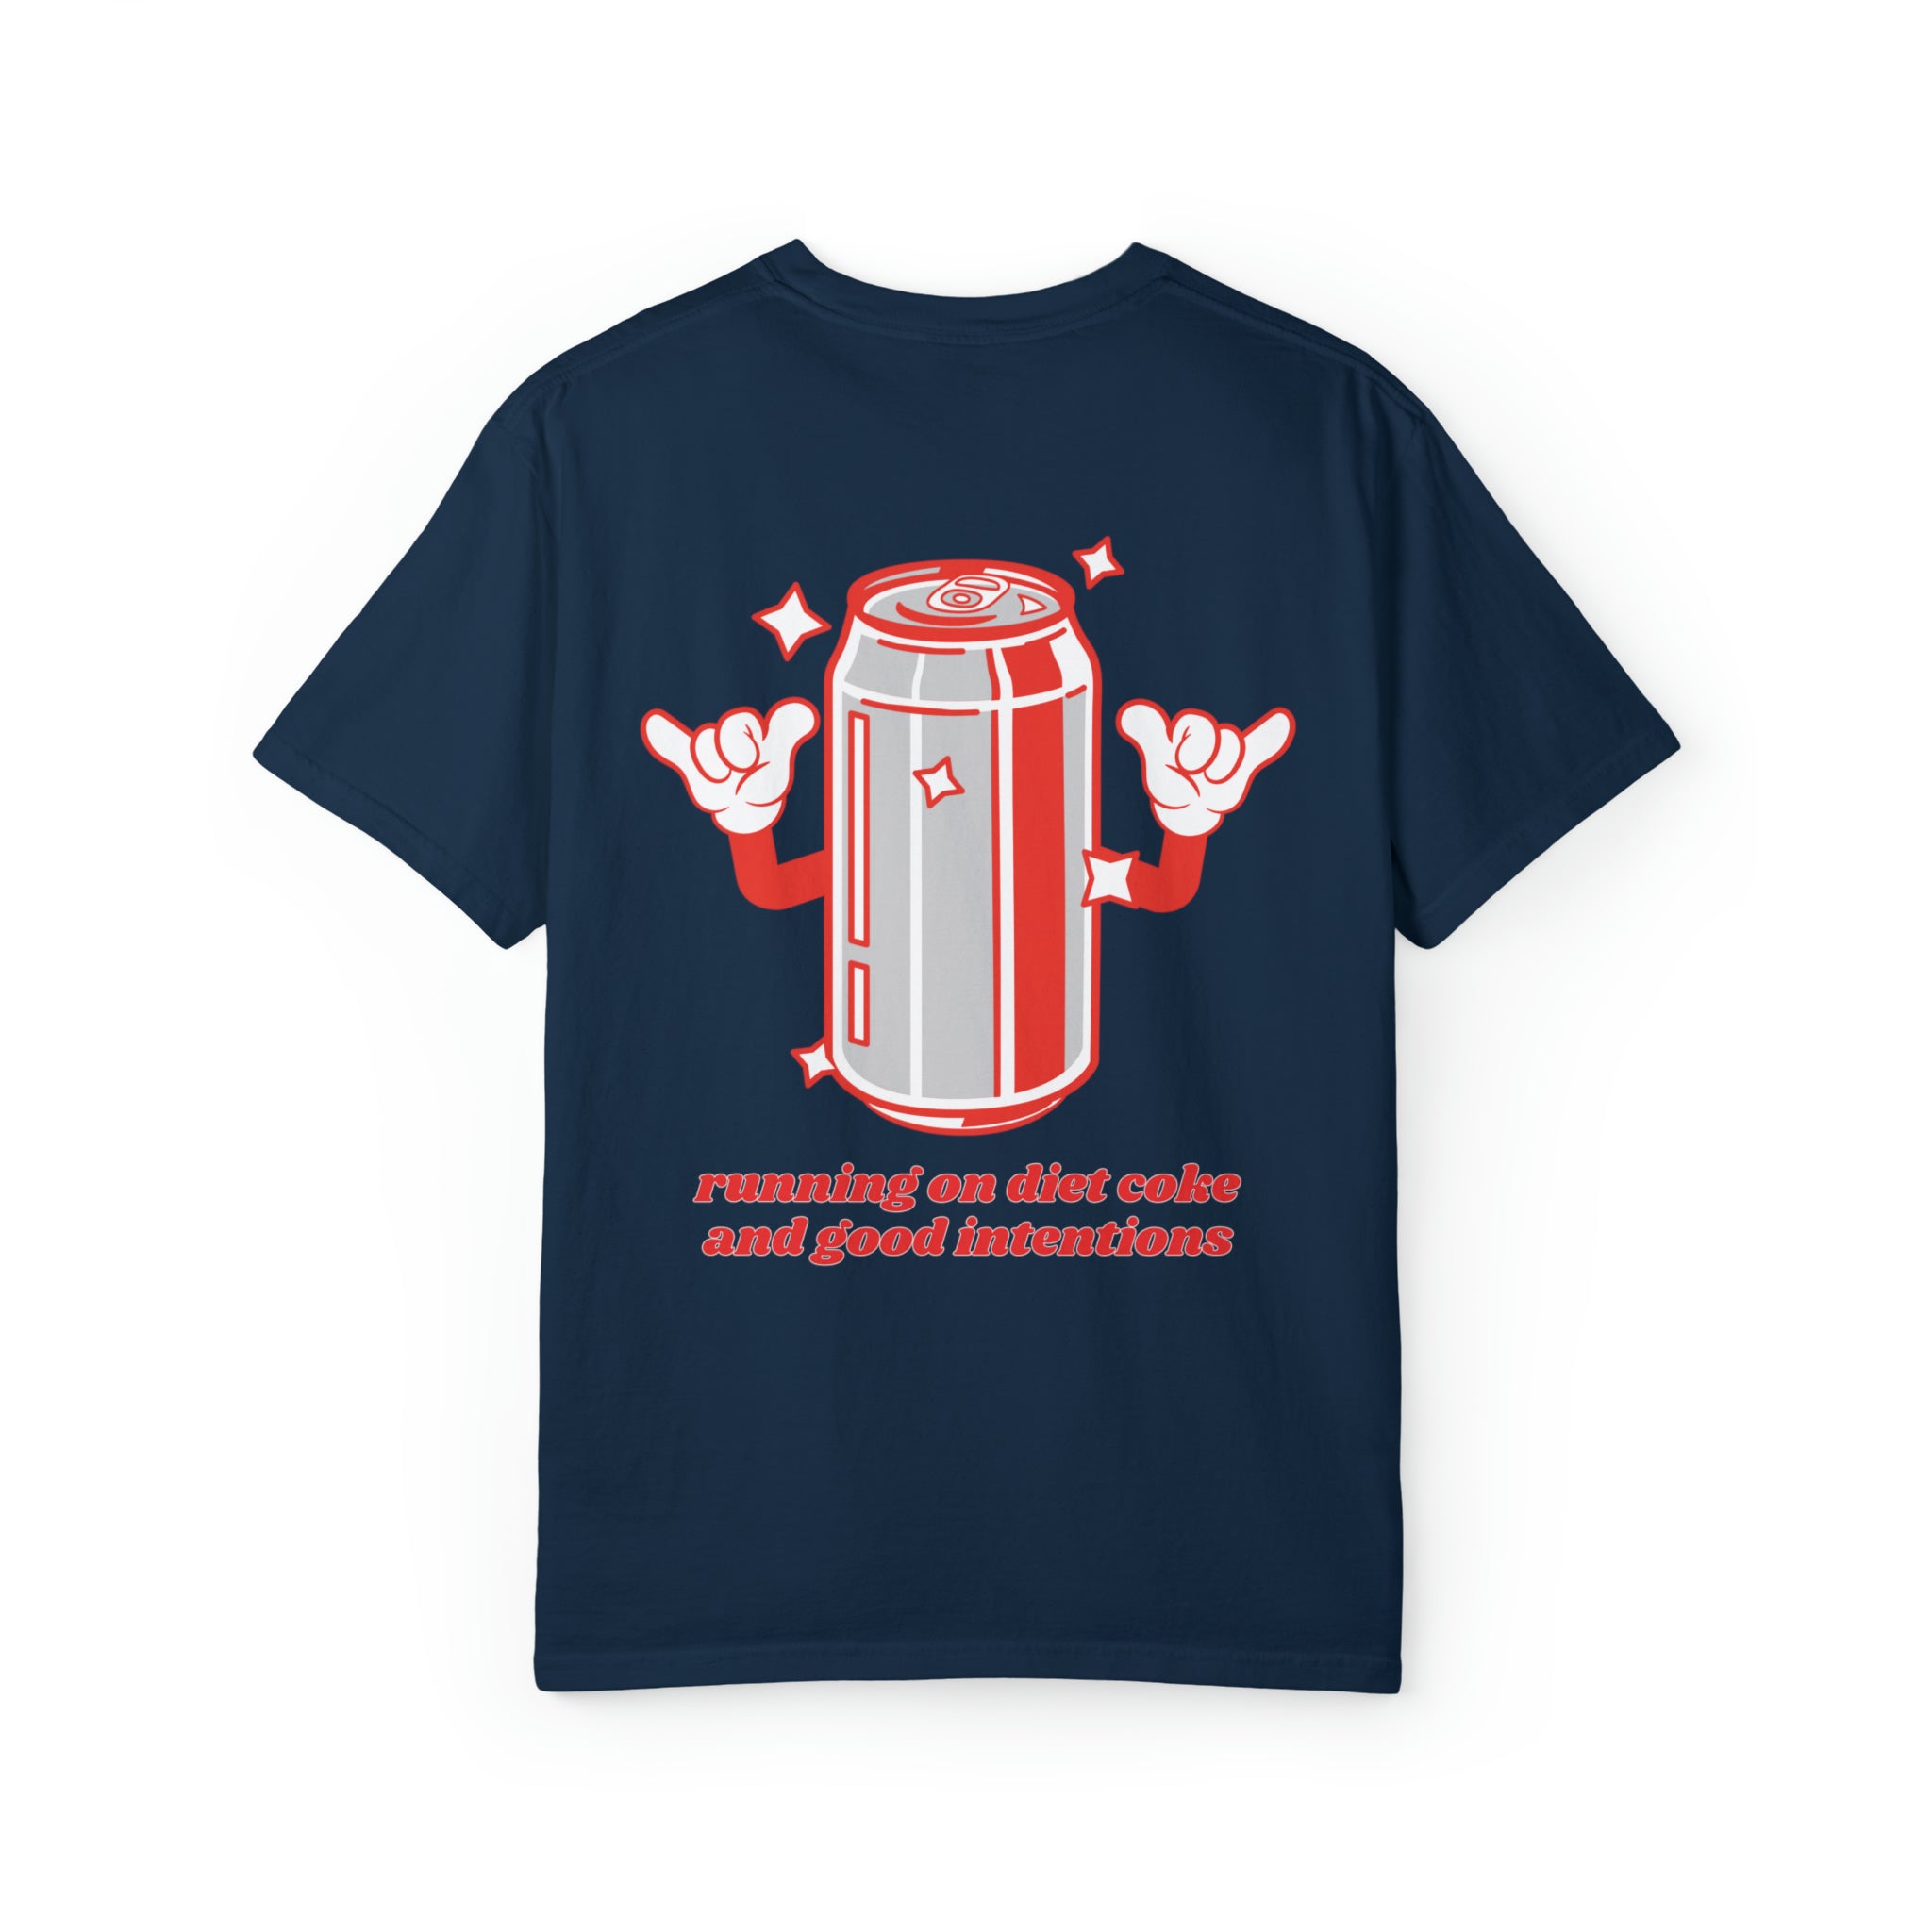 Diet Coke and Good Intentions Comfort Colors Crewneck T-shirt